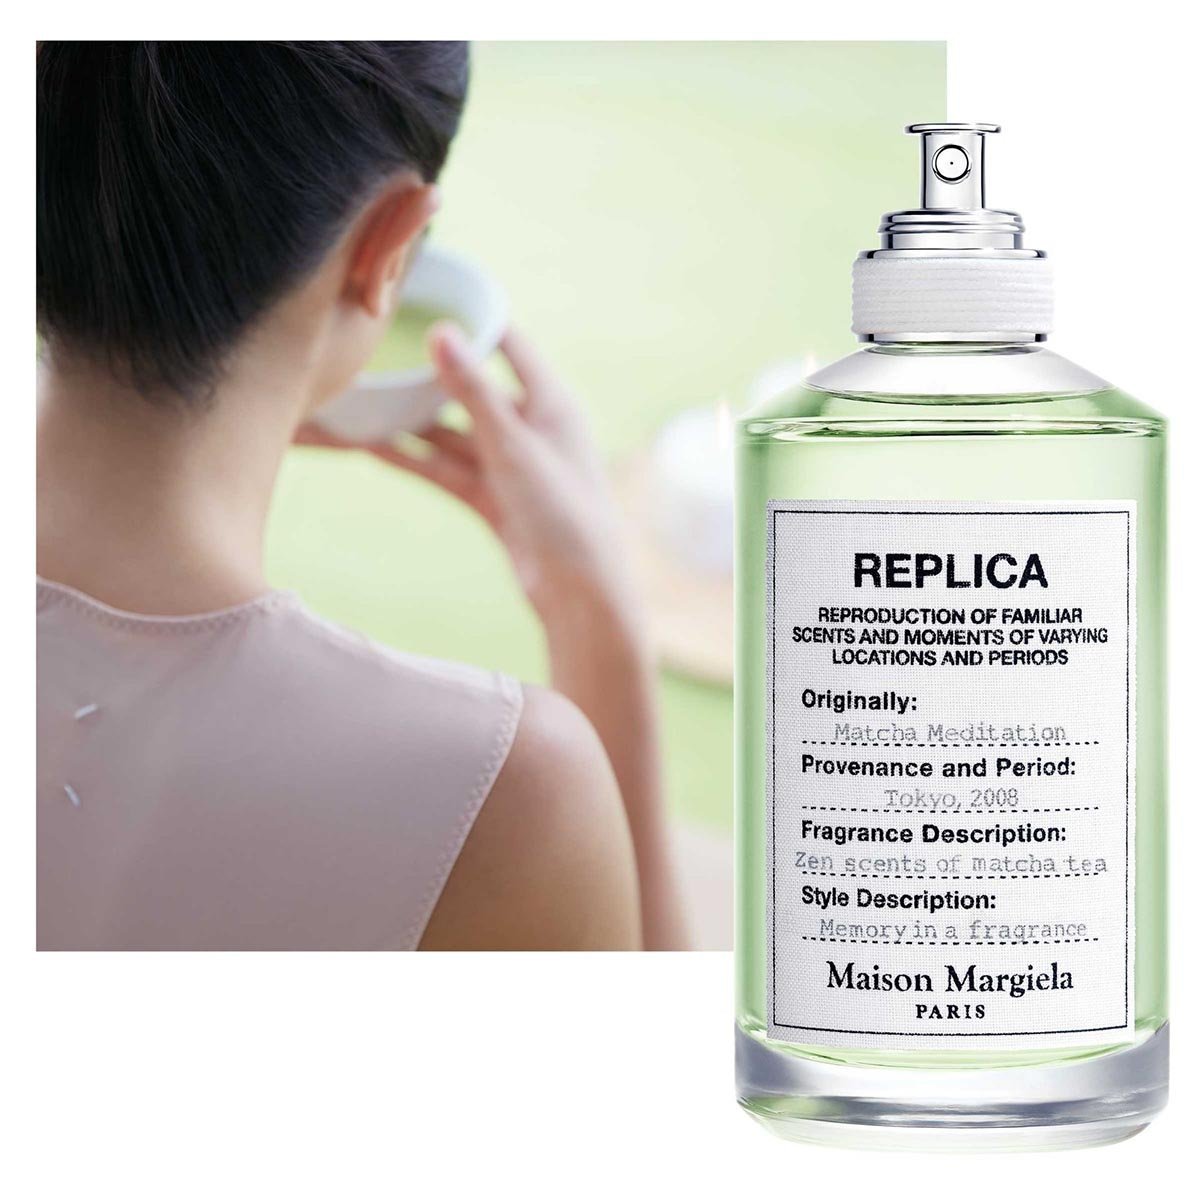 Maison Margiela 'Replica' Matcha Meditation EDT - My Perfume Shop Australia